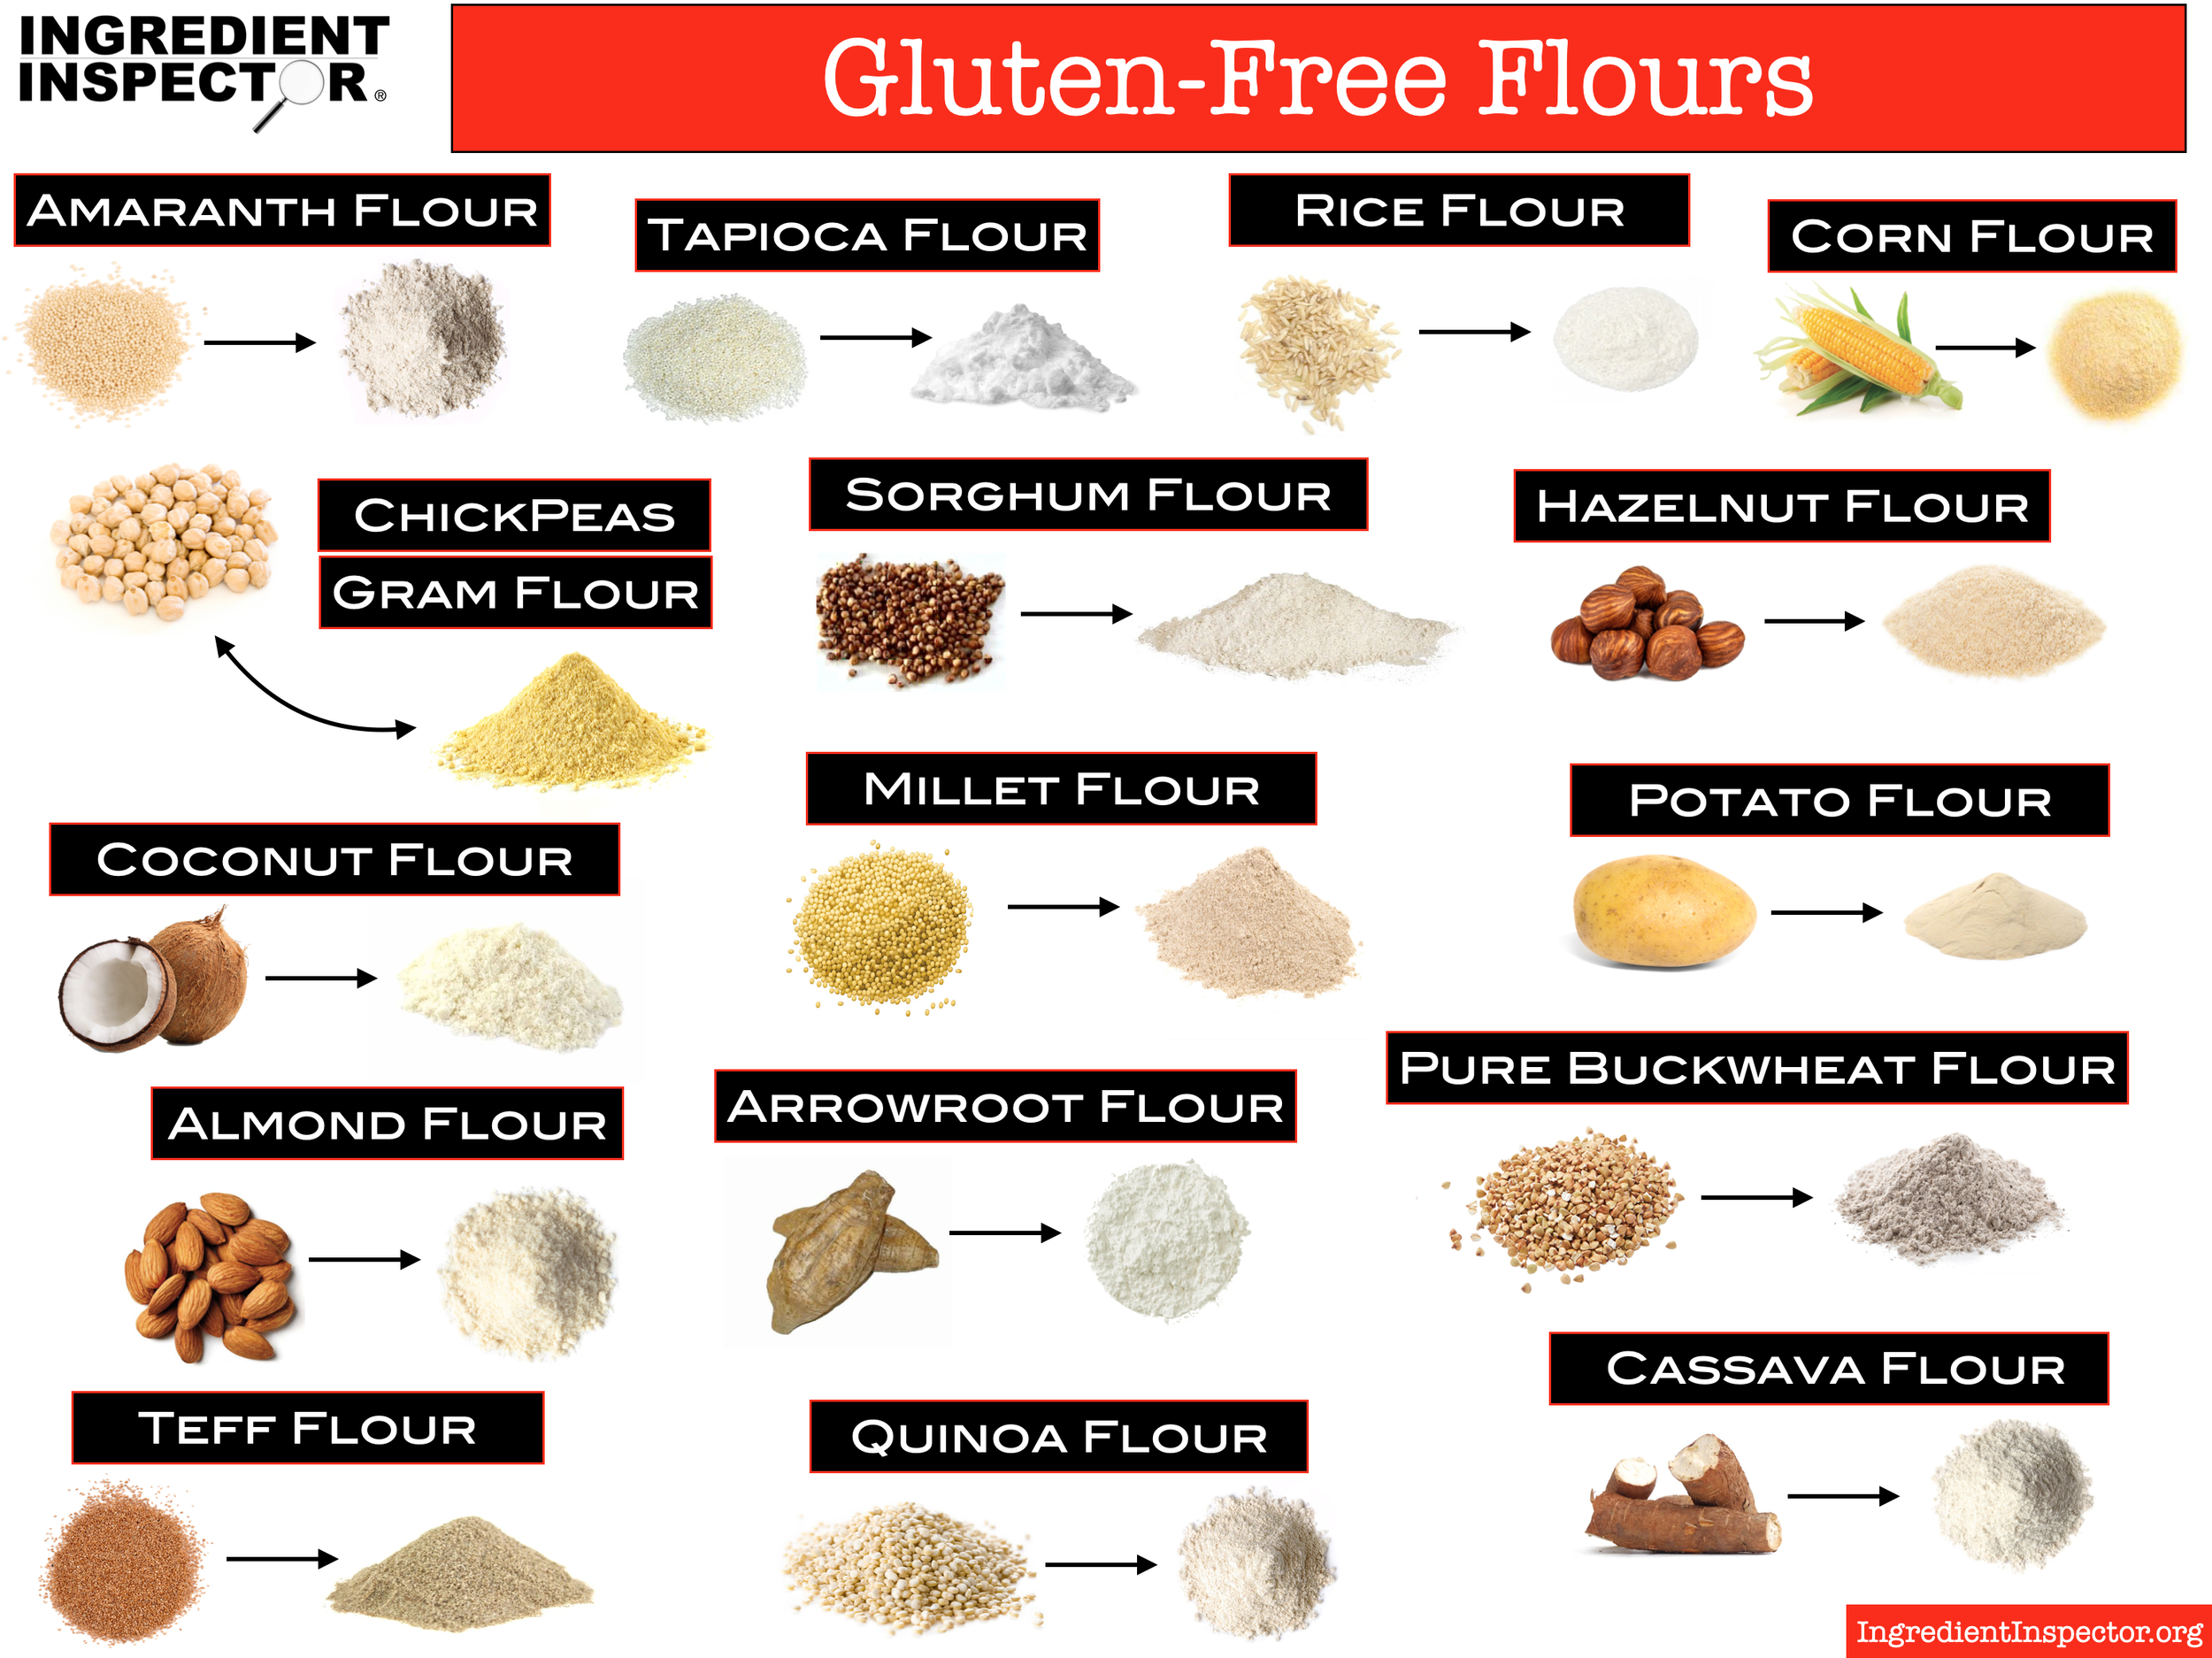 Anthony's Goods - Arrowroot Powder: Certified Gluten-Free